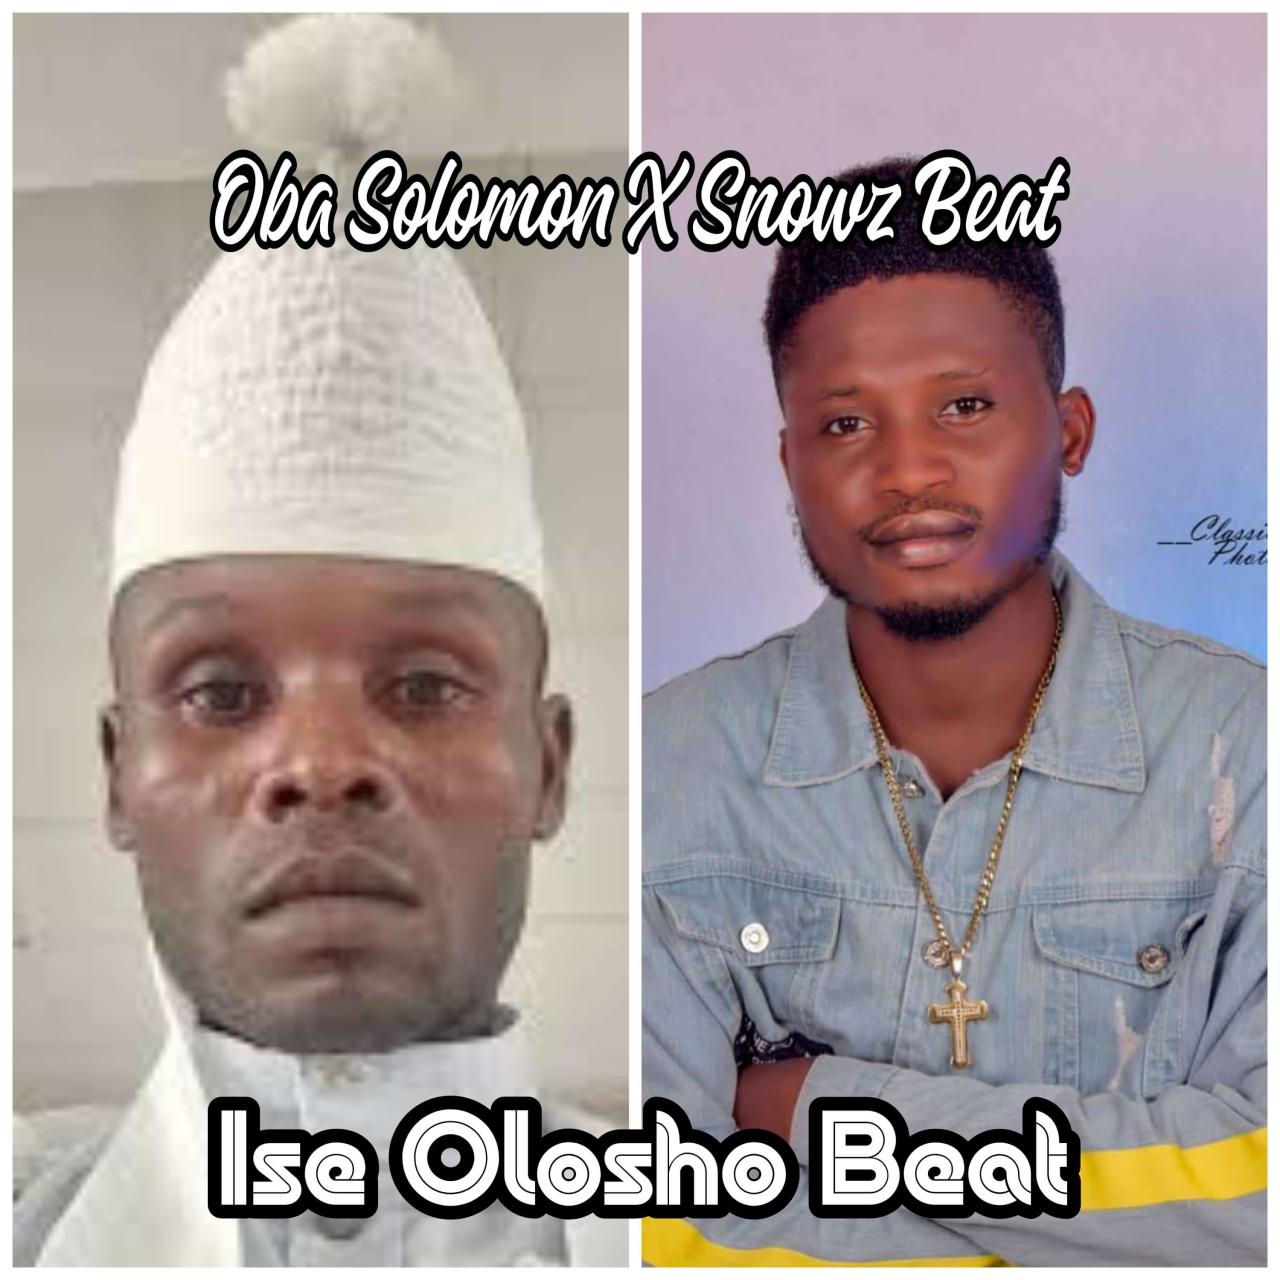 Free Beat: Snowz Beat X Oba Solomon - Ise Olosho Beat